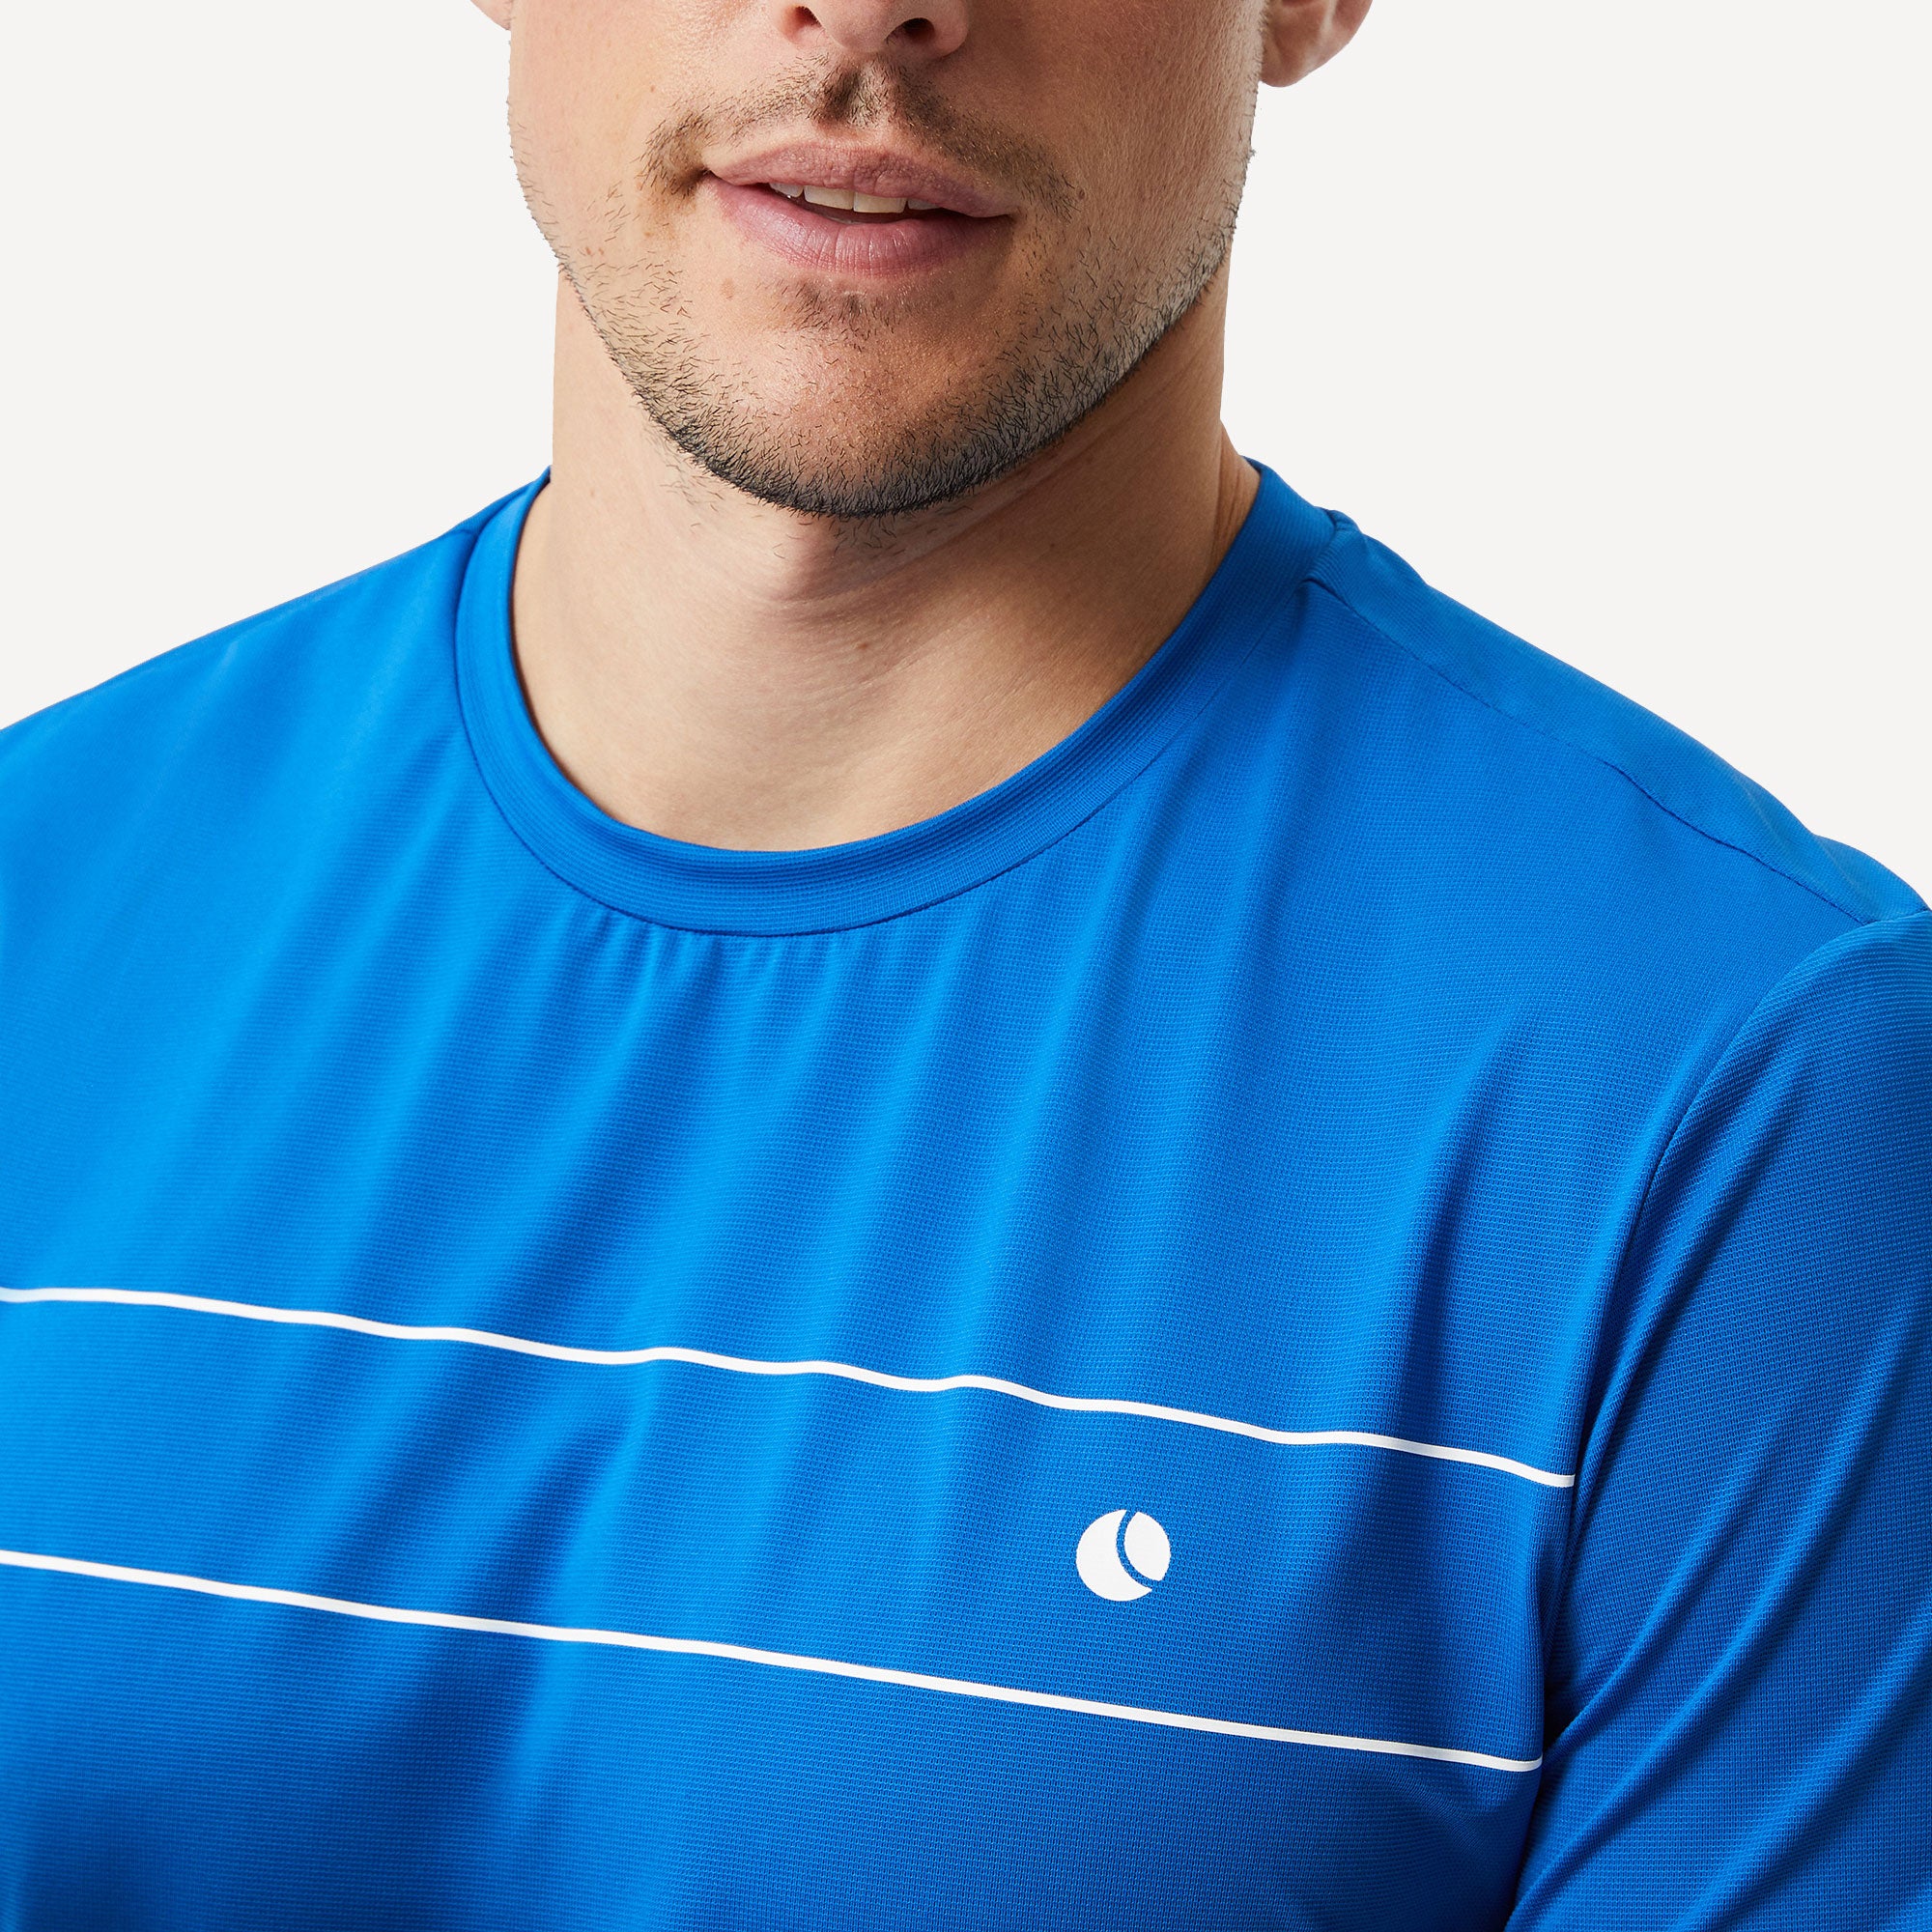 Björn Borg Ace Men's Light Tennis Shirt - Blue (3)